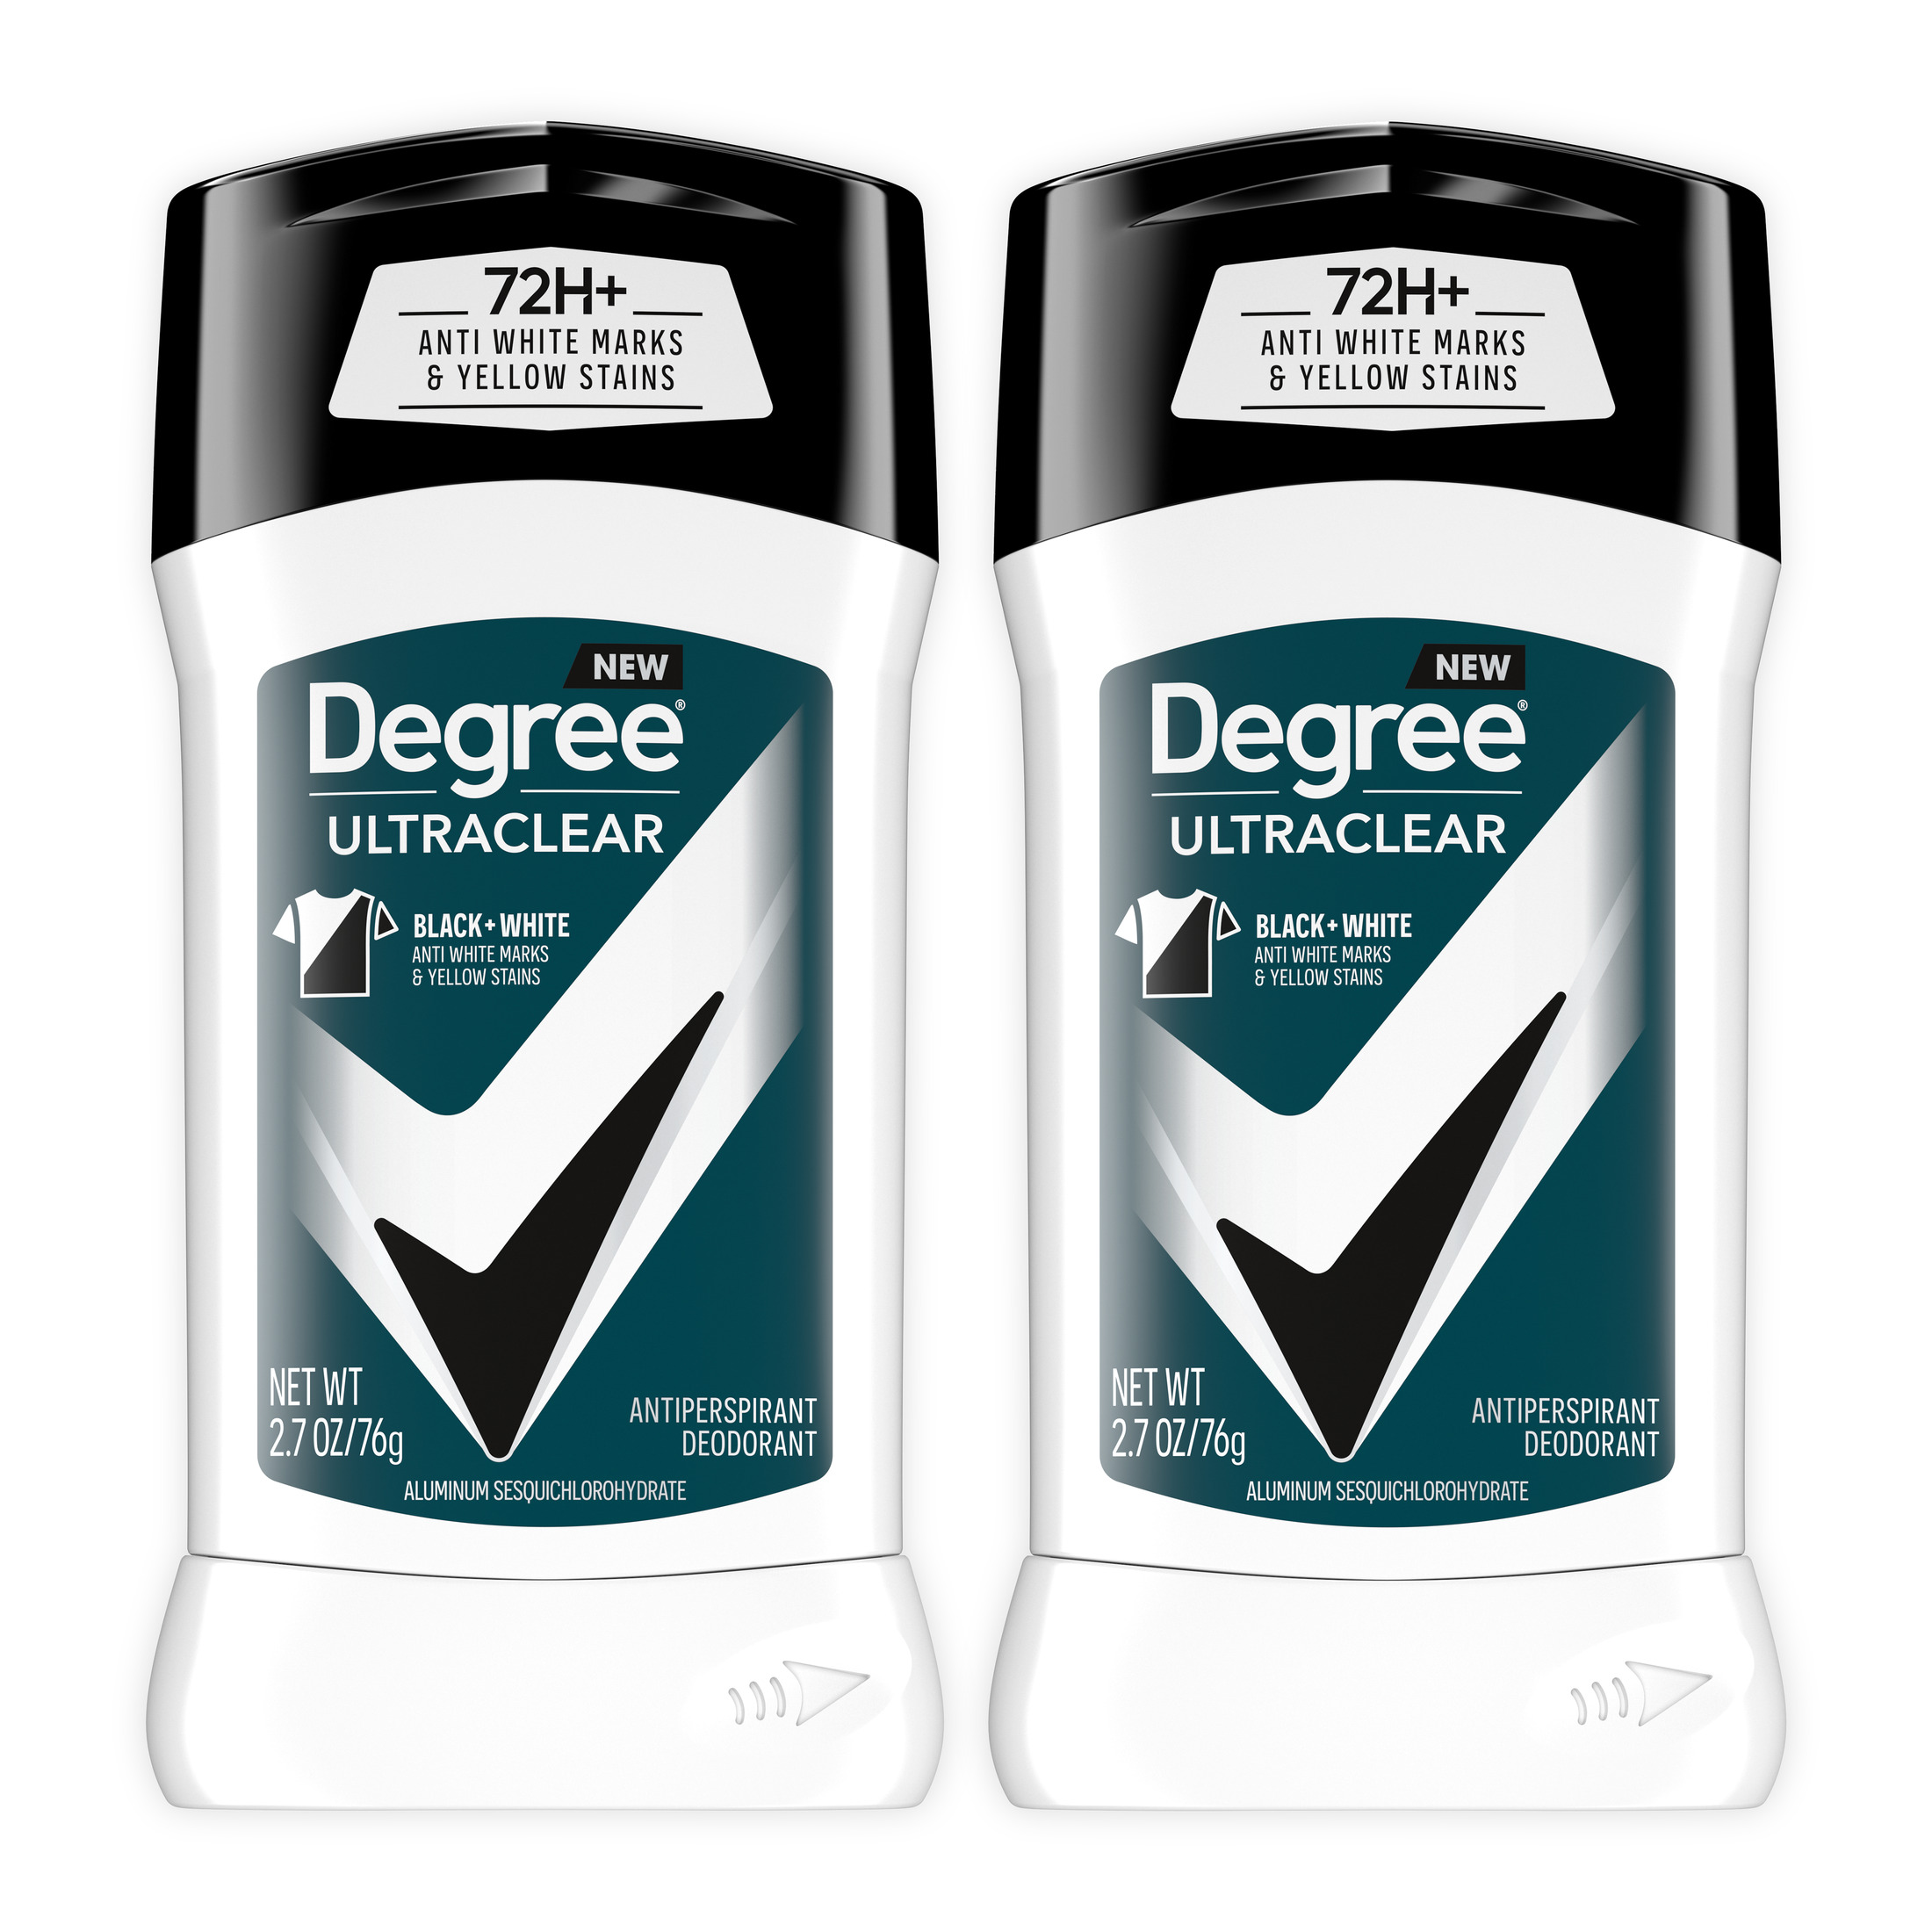 Degree Ultra Clear Anti White Marks Men's Antiperspirant Deodorant Stick Black + White, 2.7 oz Twin Pack - image 1 of 10